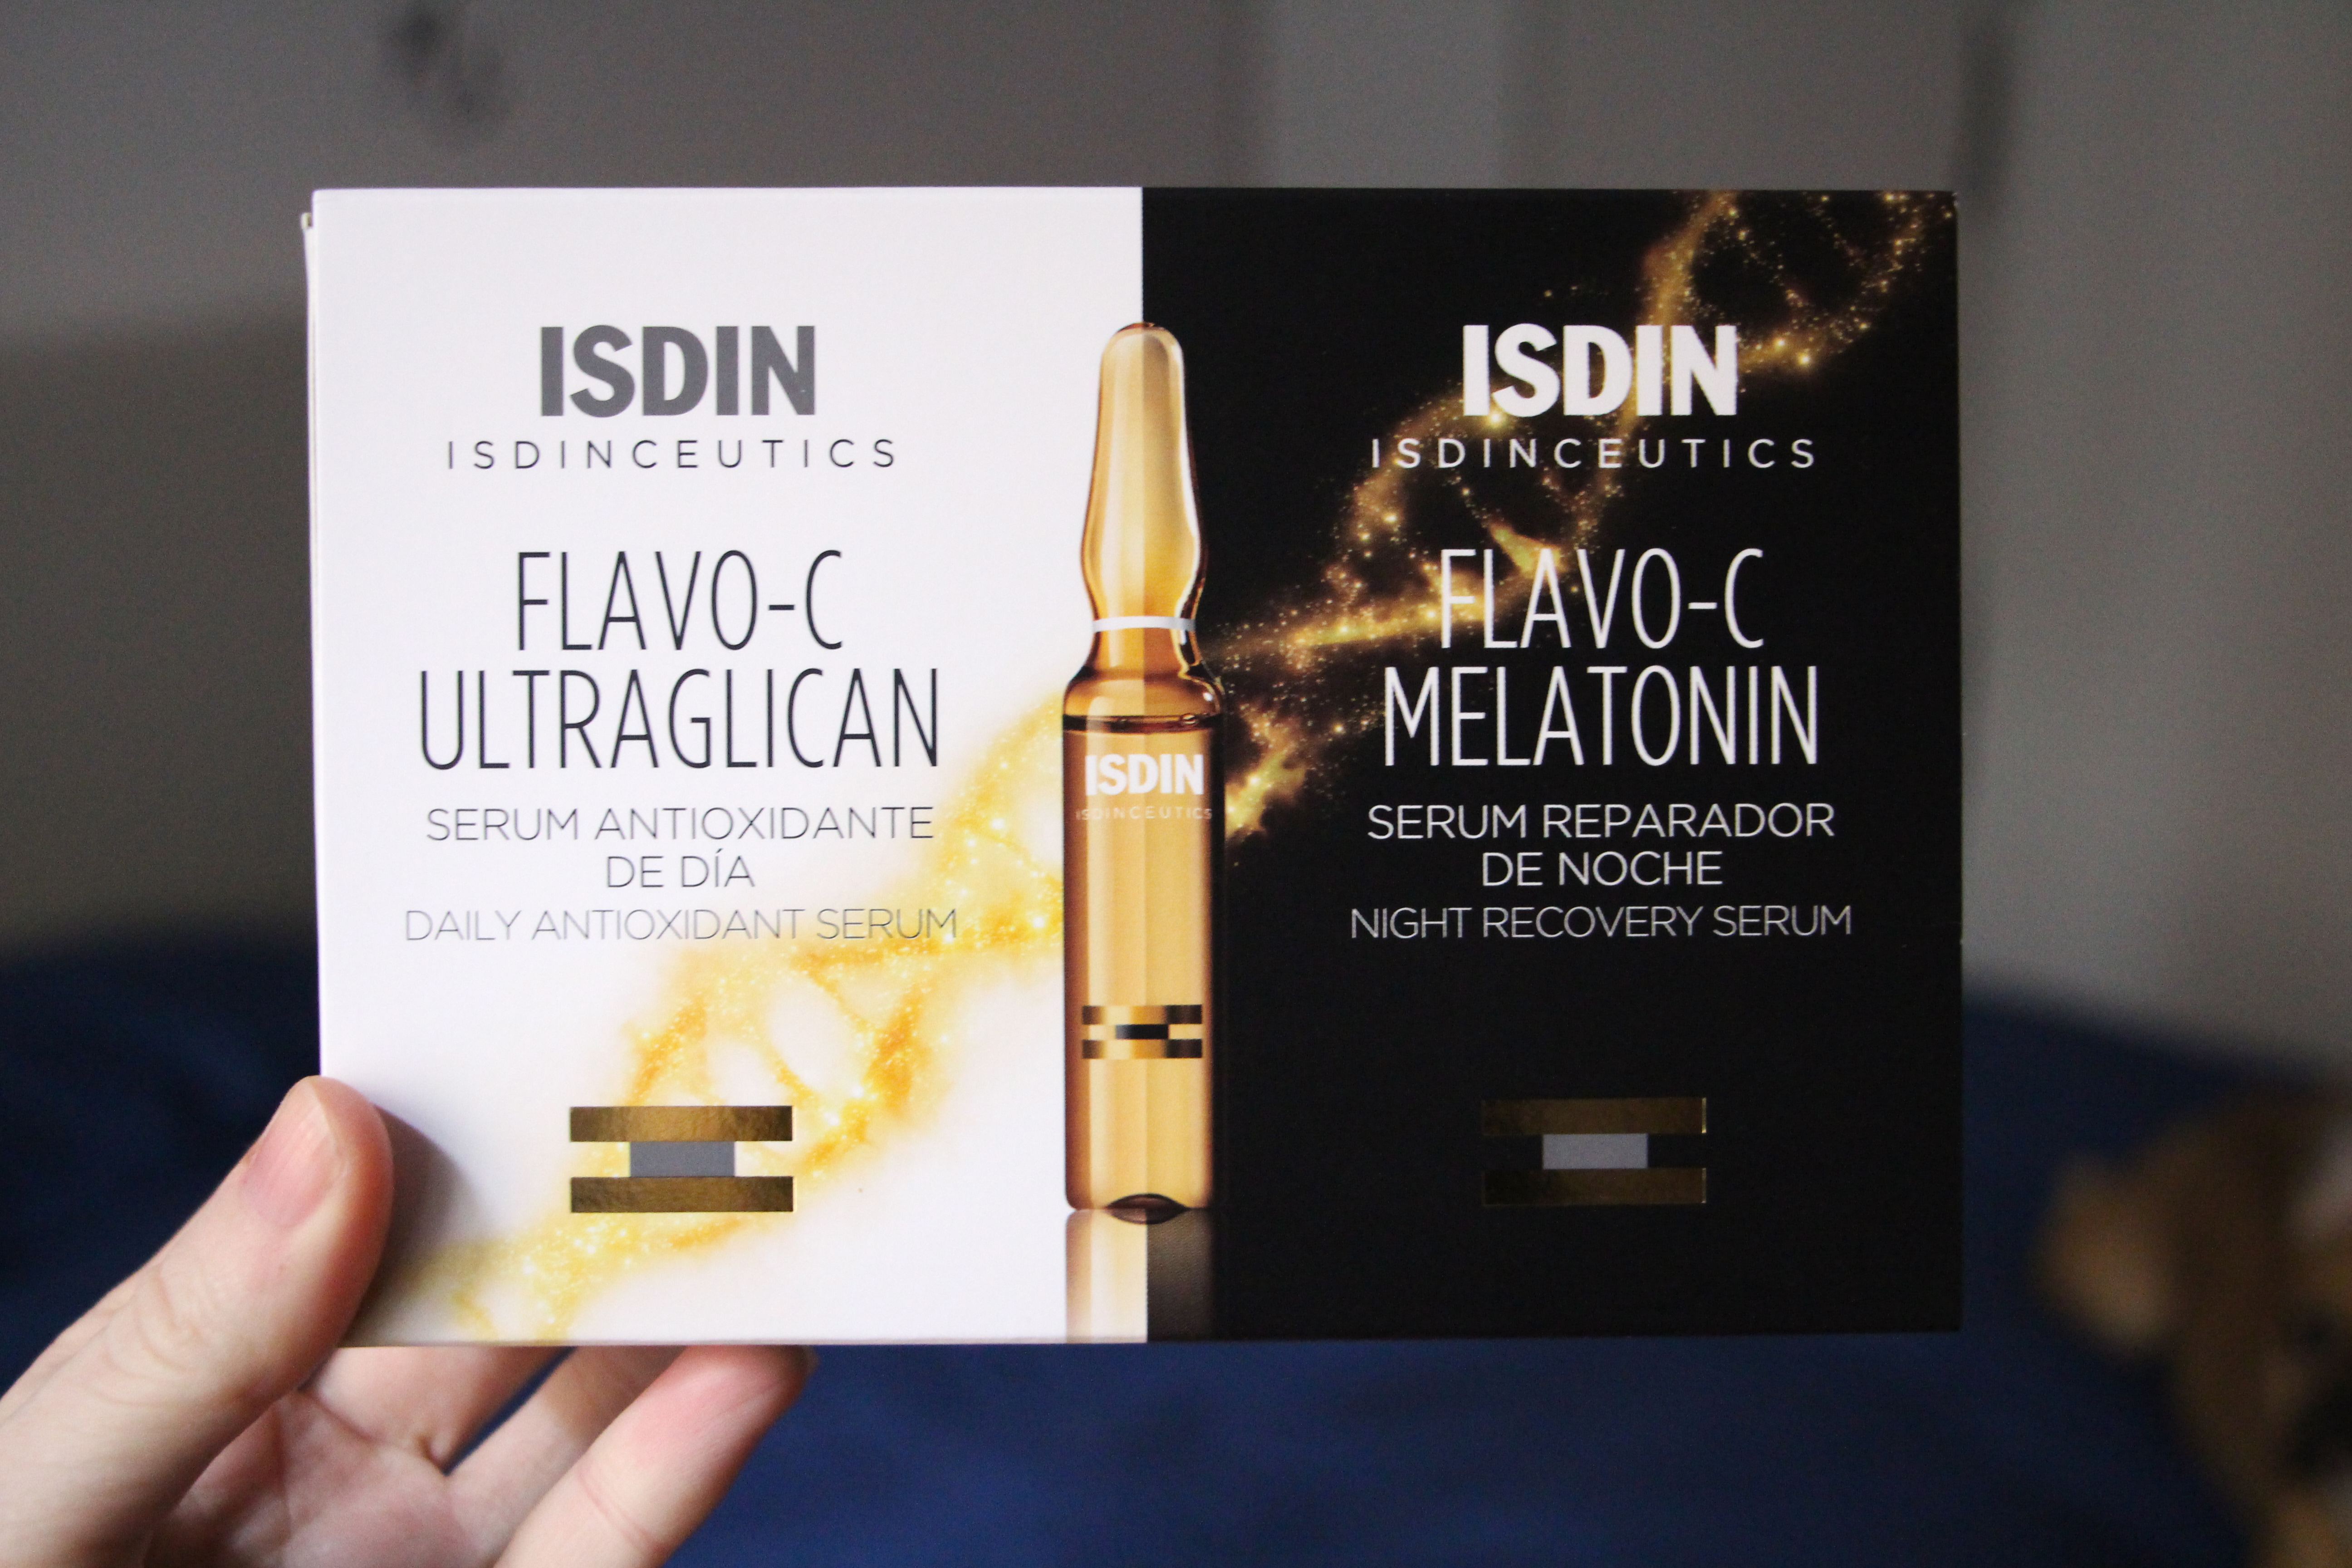 Isdinceutics Isdin Ultraglican Flavo C Melatonin Ultraglican.jpg